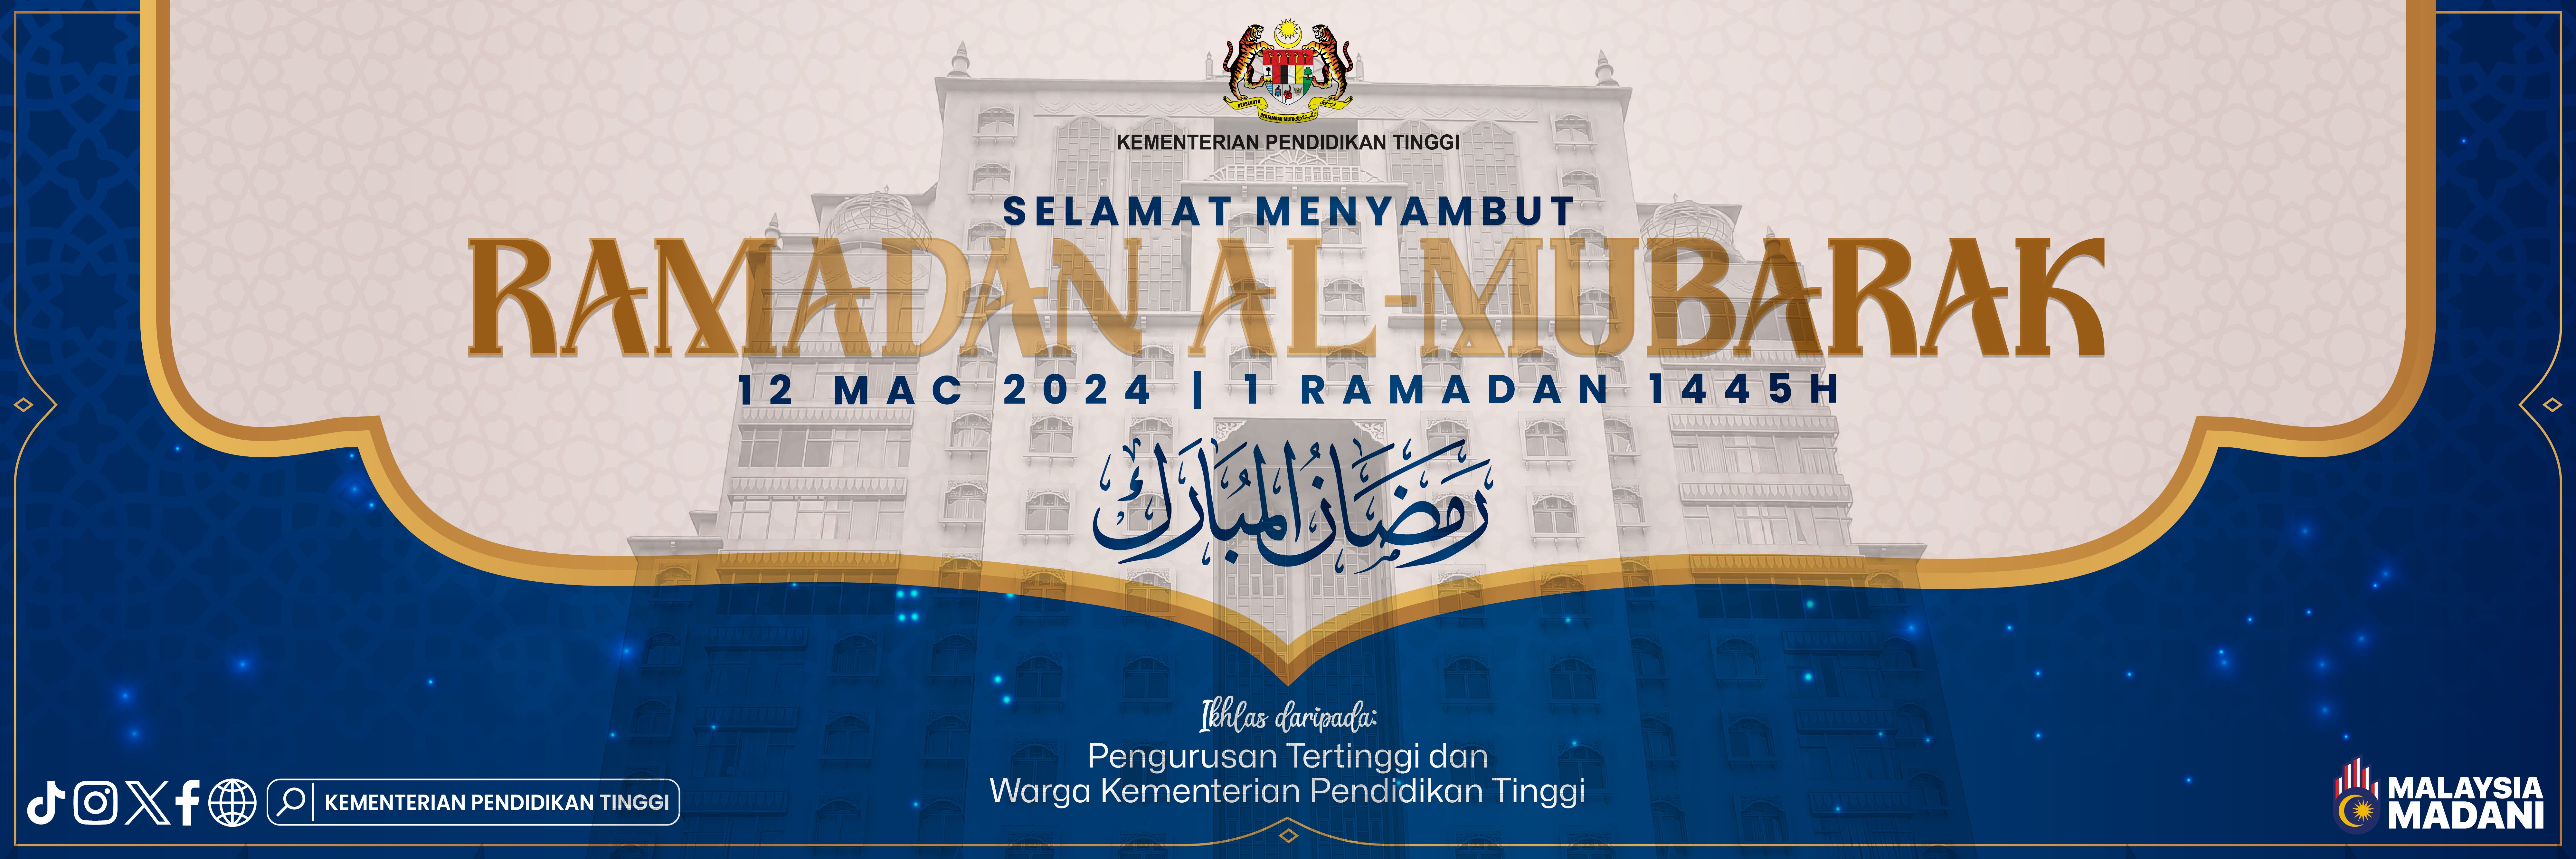 Poster Ramadan